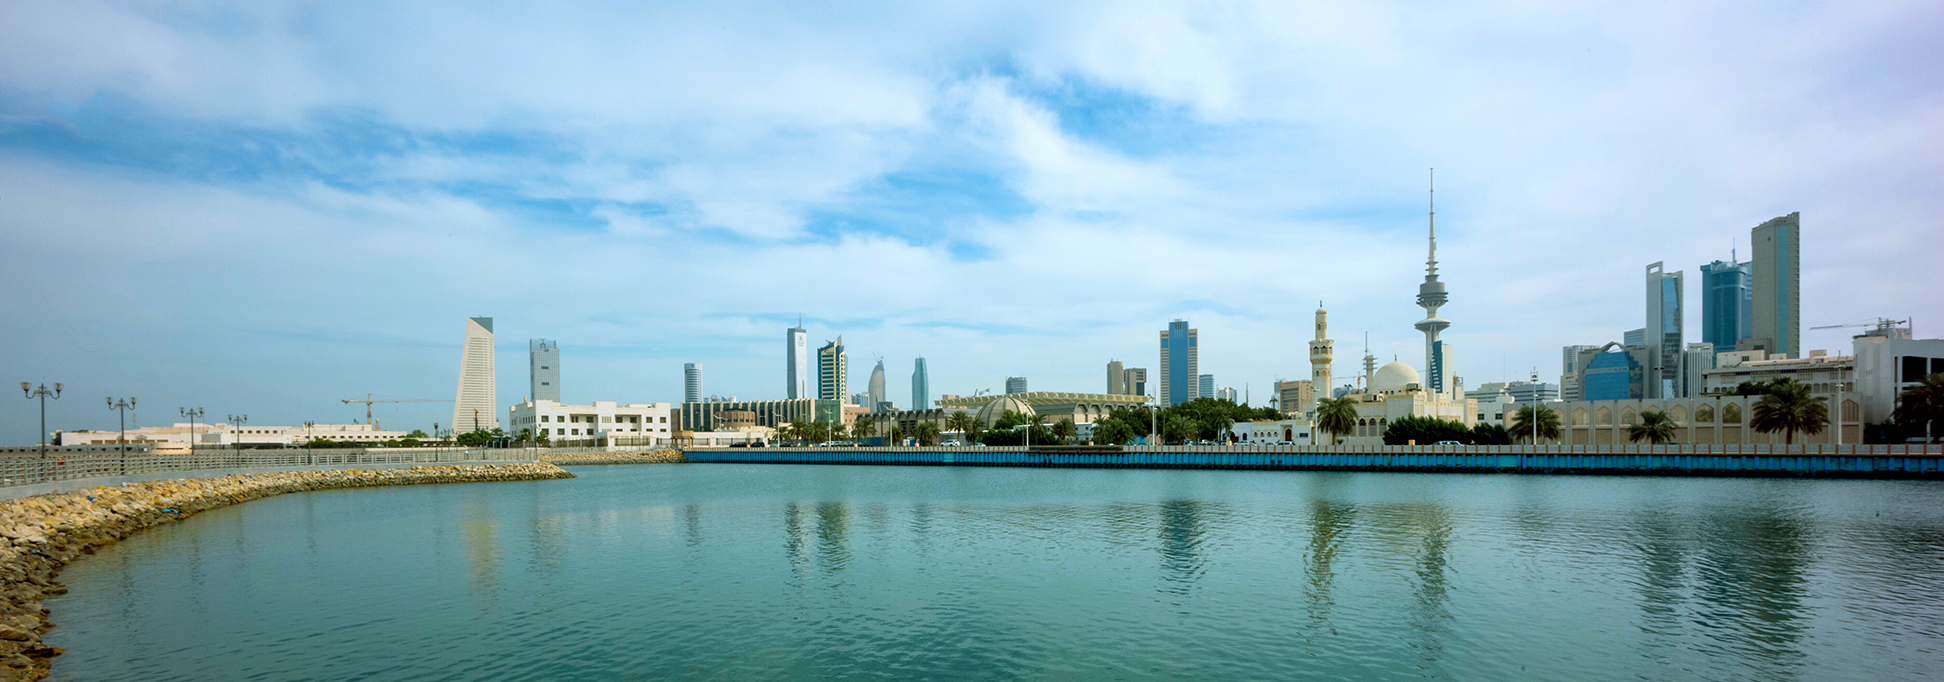 kuwait city in global trading hub